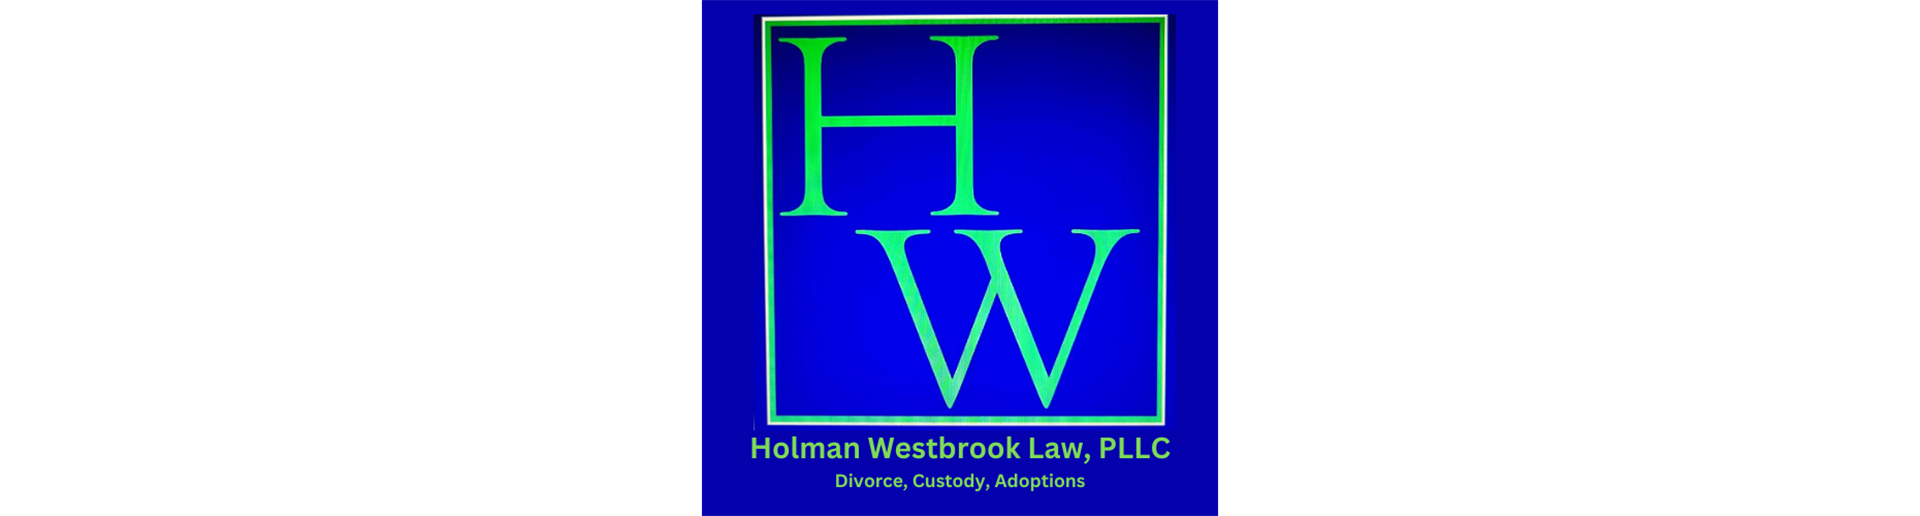 Holeman Westbrook Law, PLLC